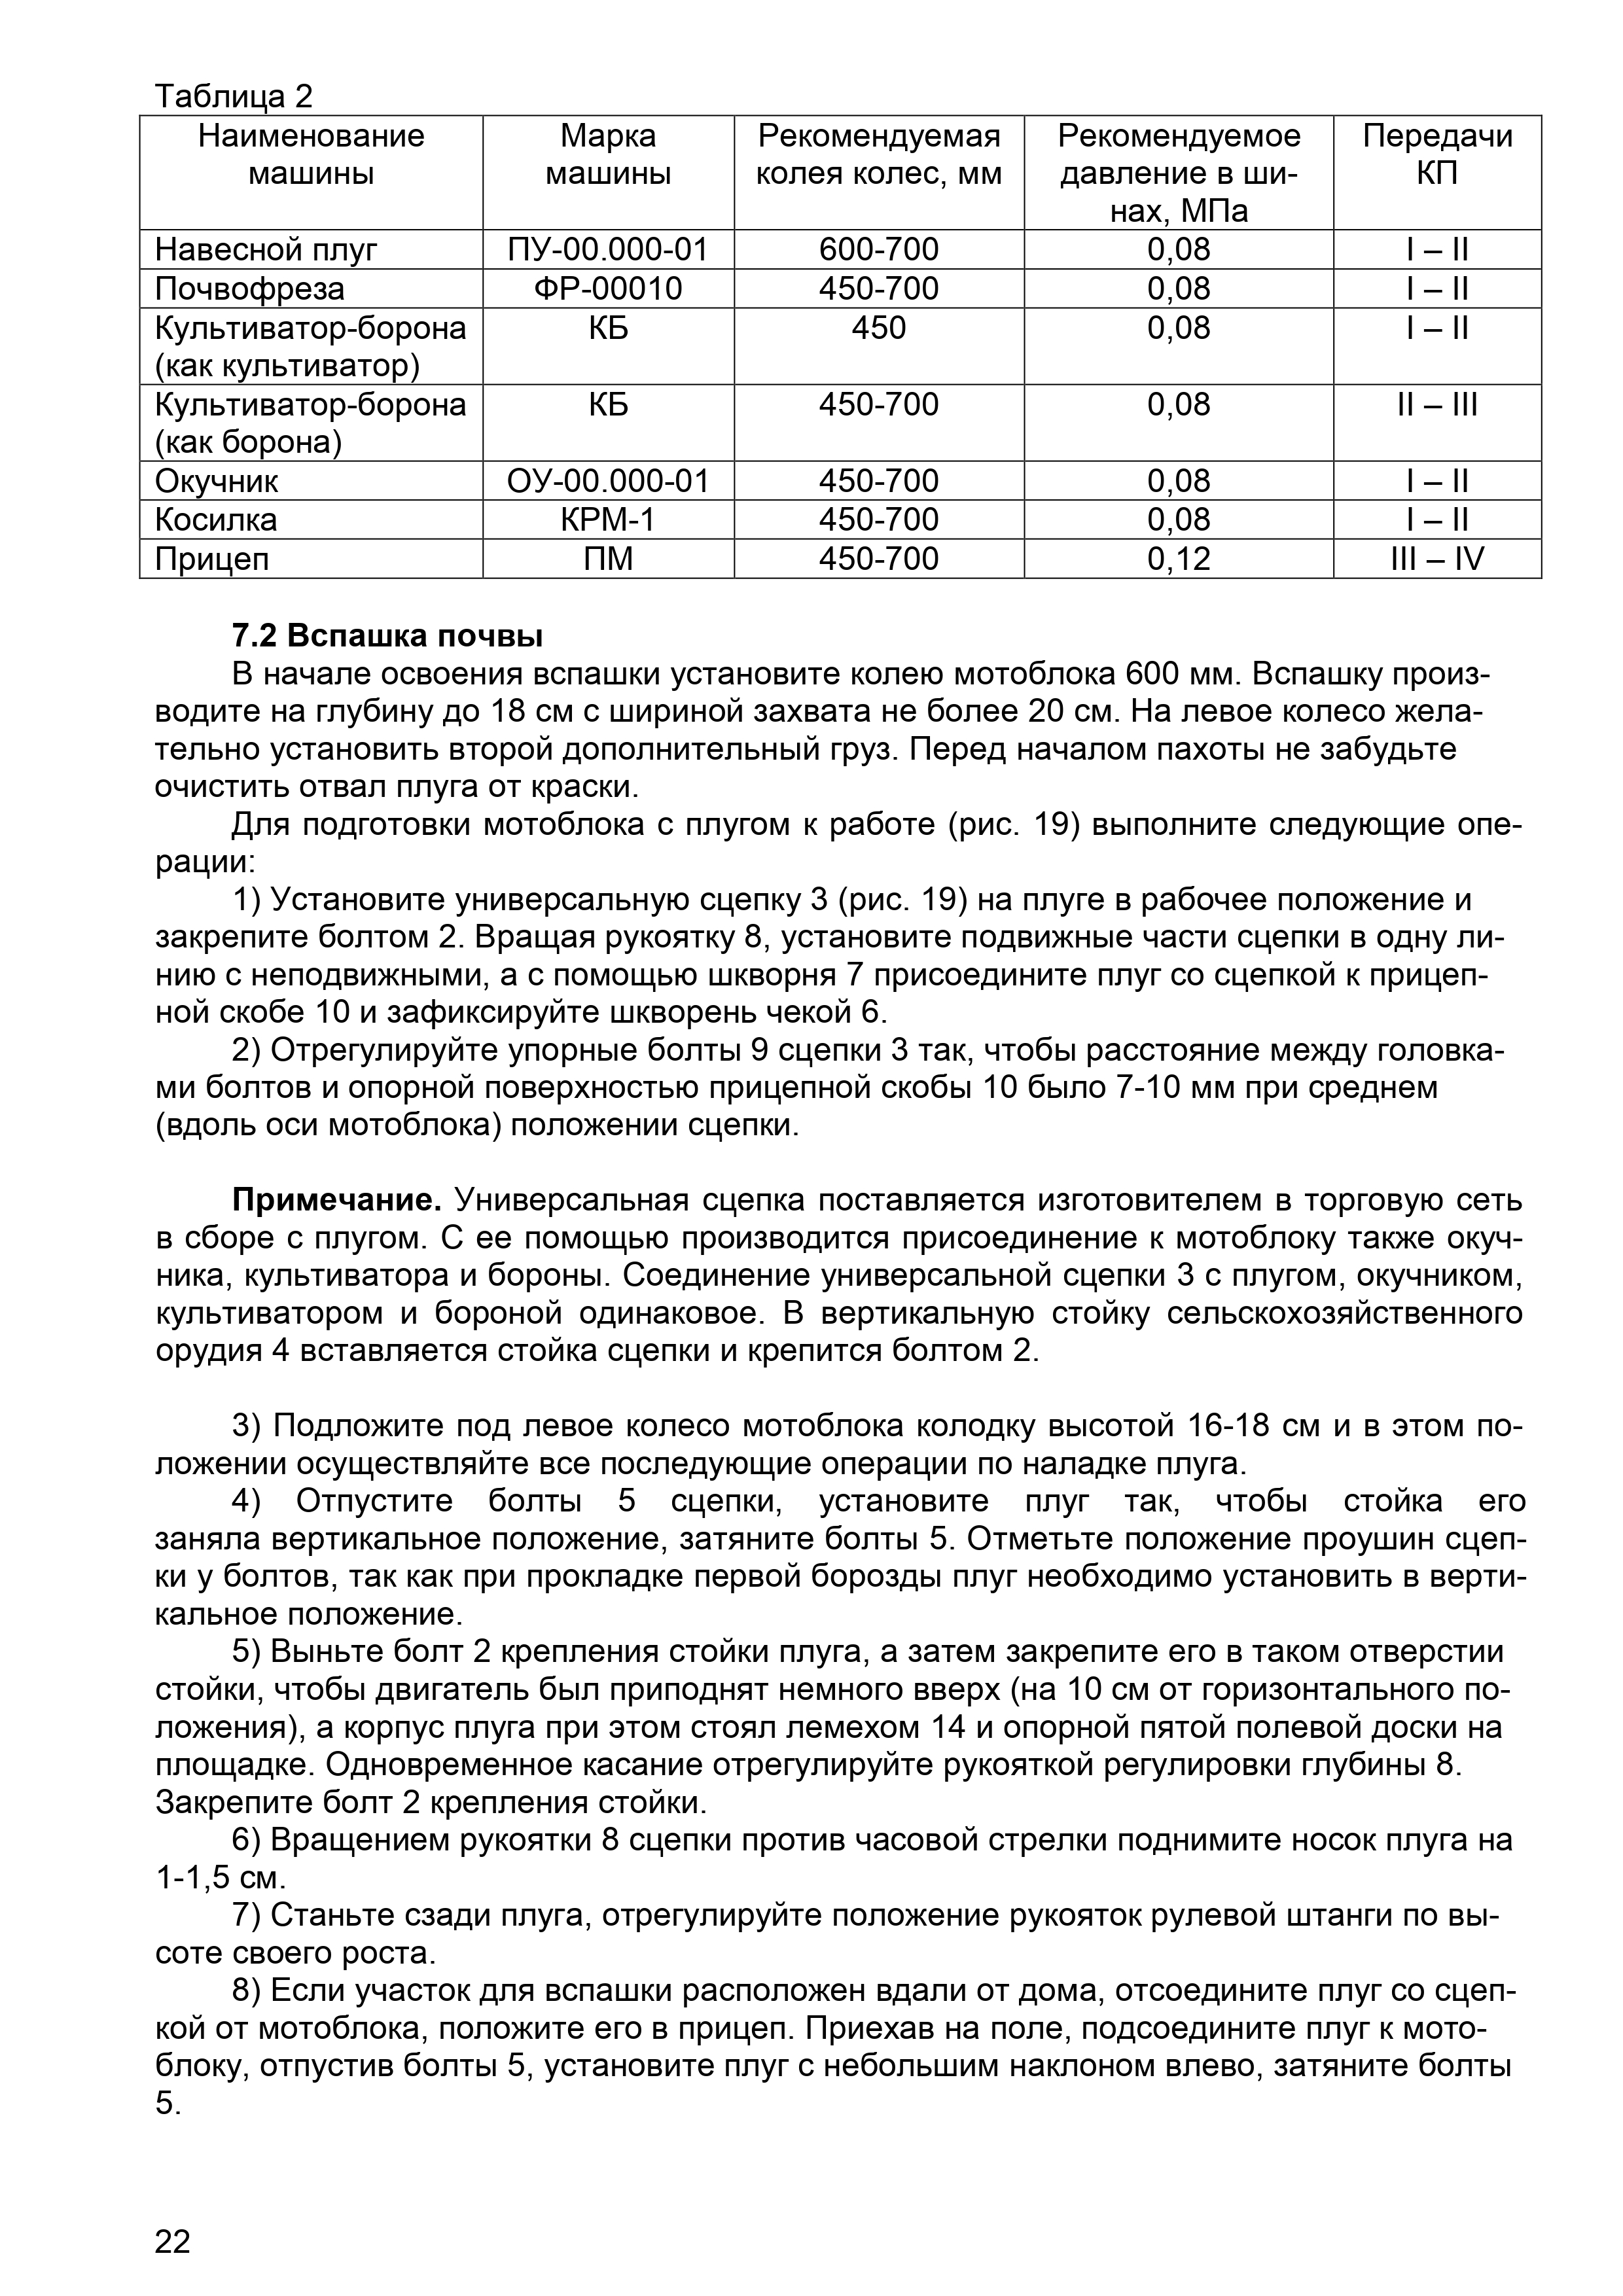 belarus_09h_manual i catalog (1)_page-0022